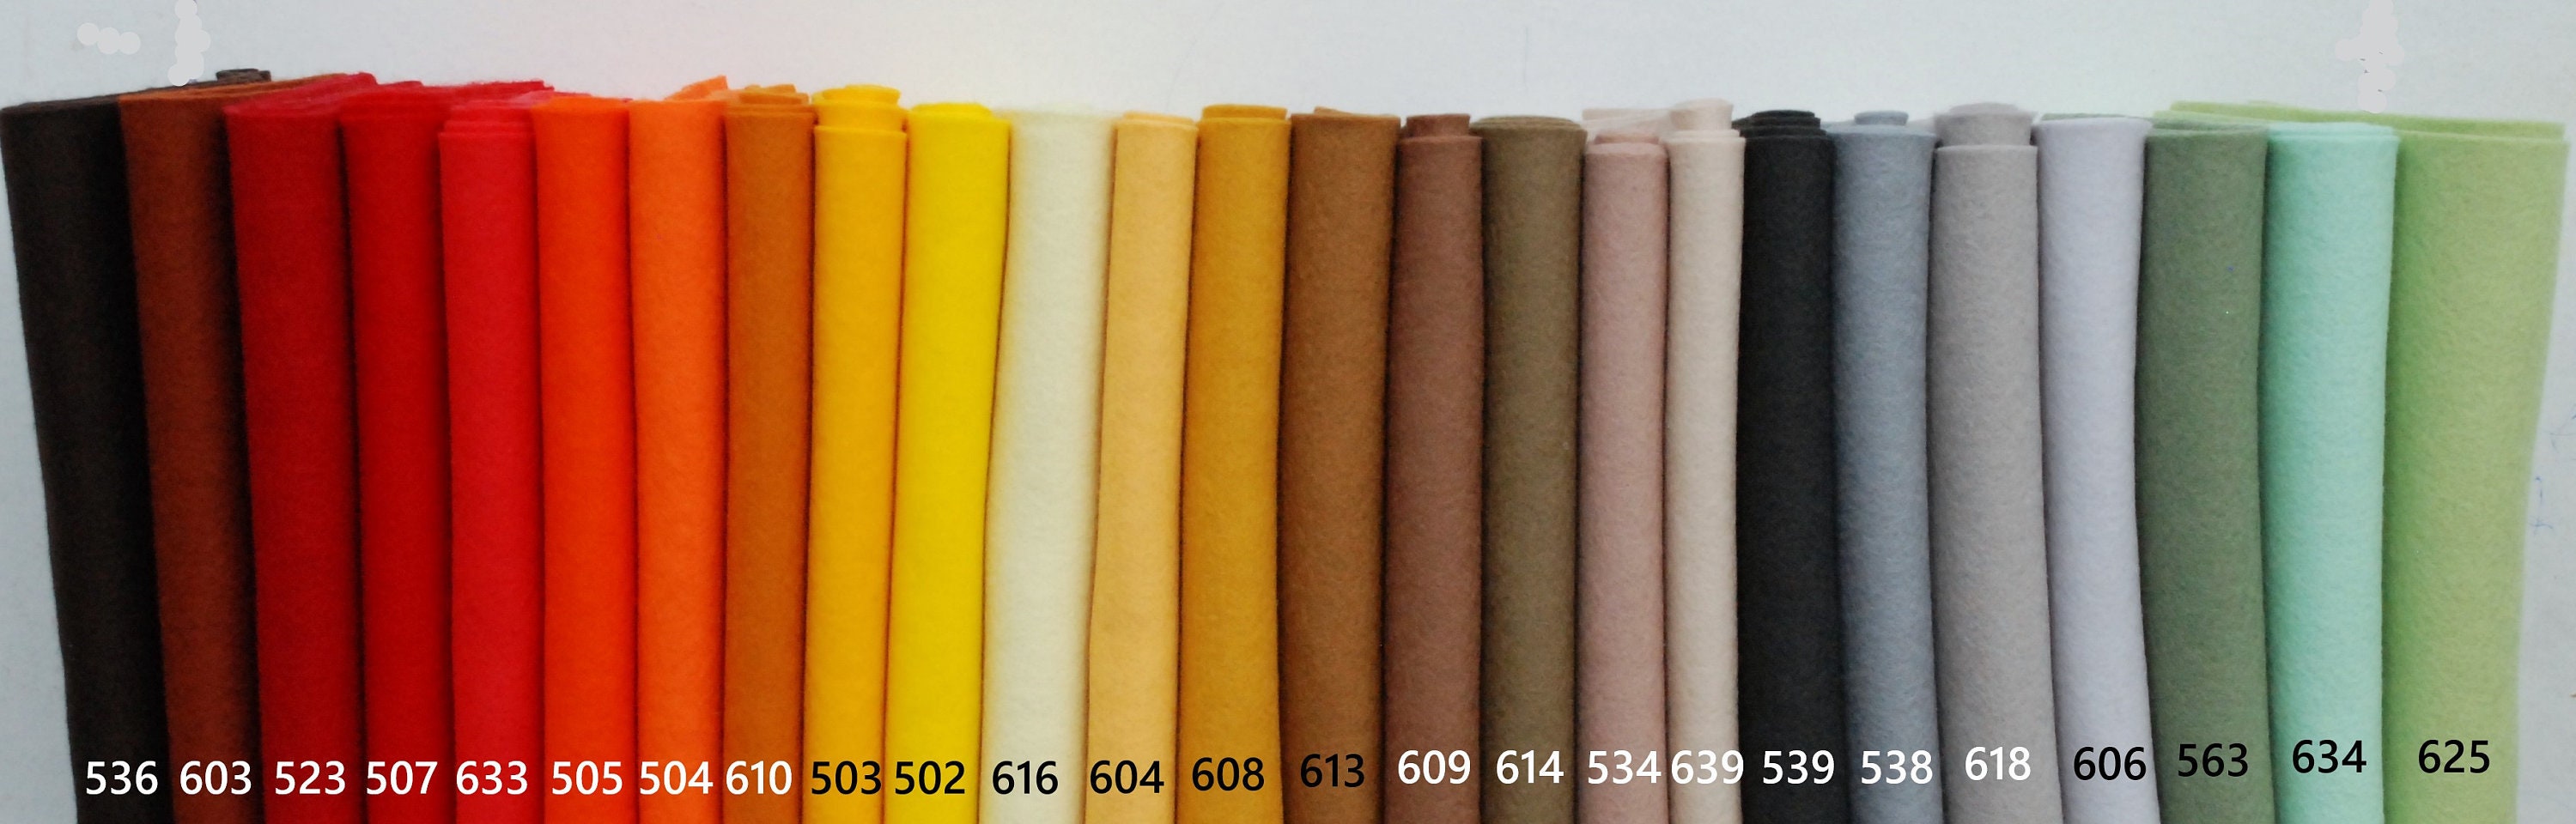 100% Merino Wool Craft Felt - Natural OFFWHITE (8 x 12 Sheet)